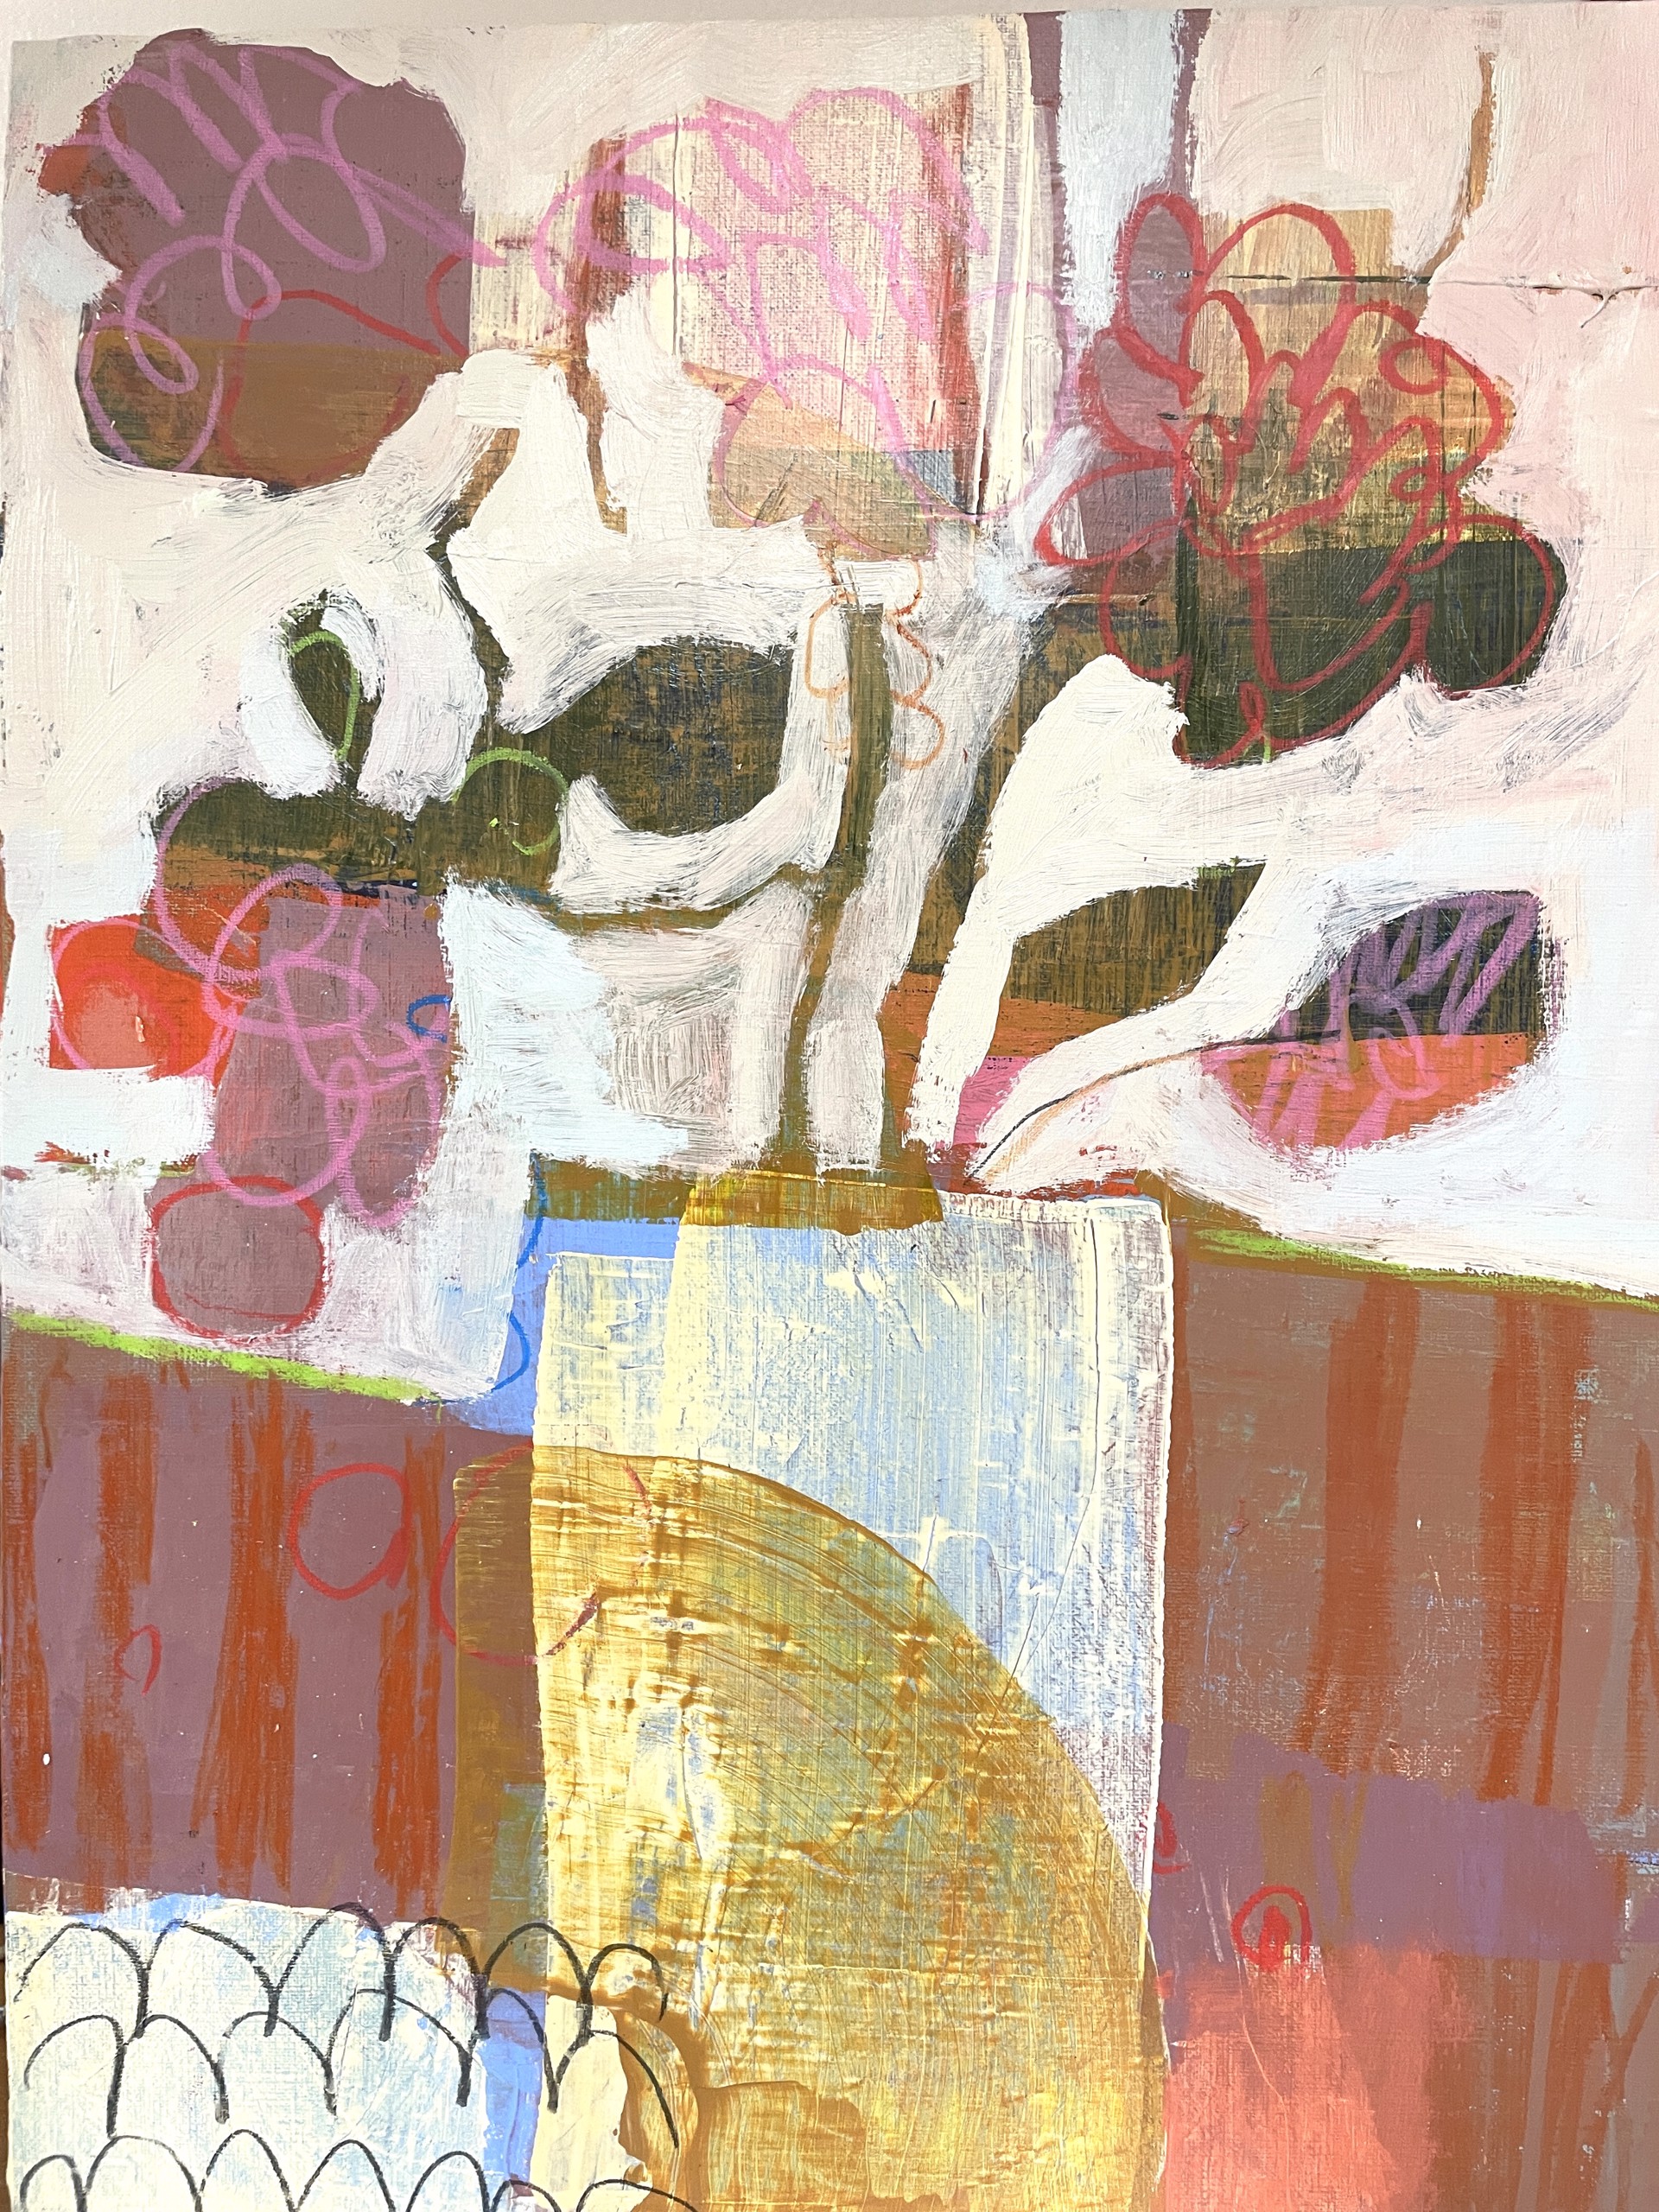 Vase with Arc of Golden Sunlight by Rachael Van Dyke